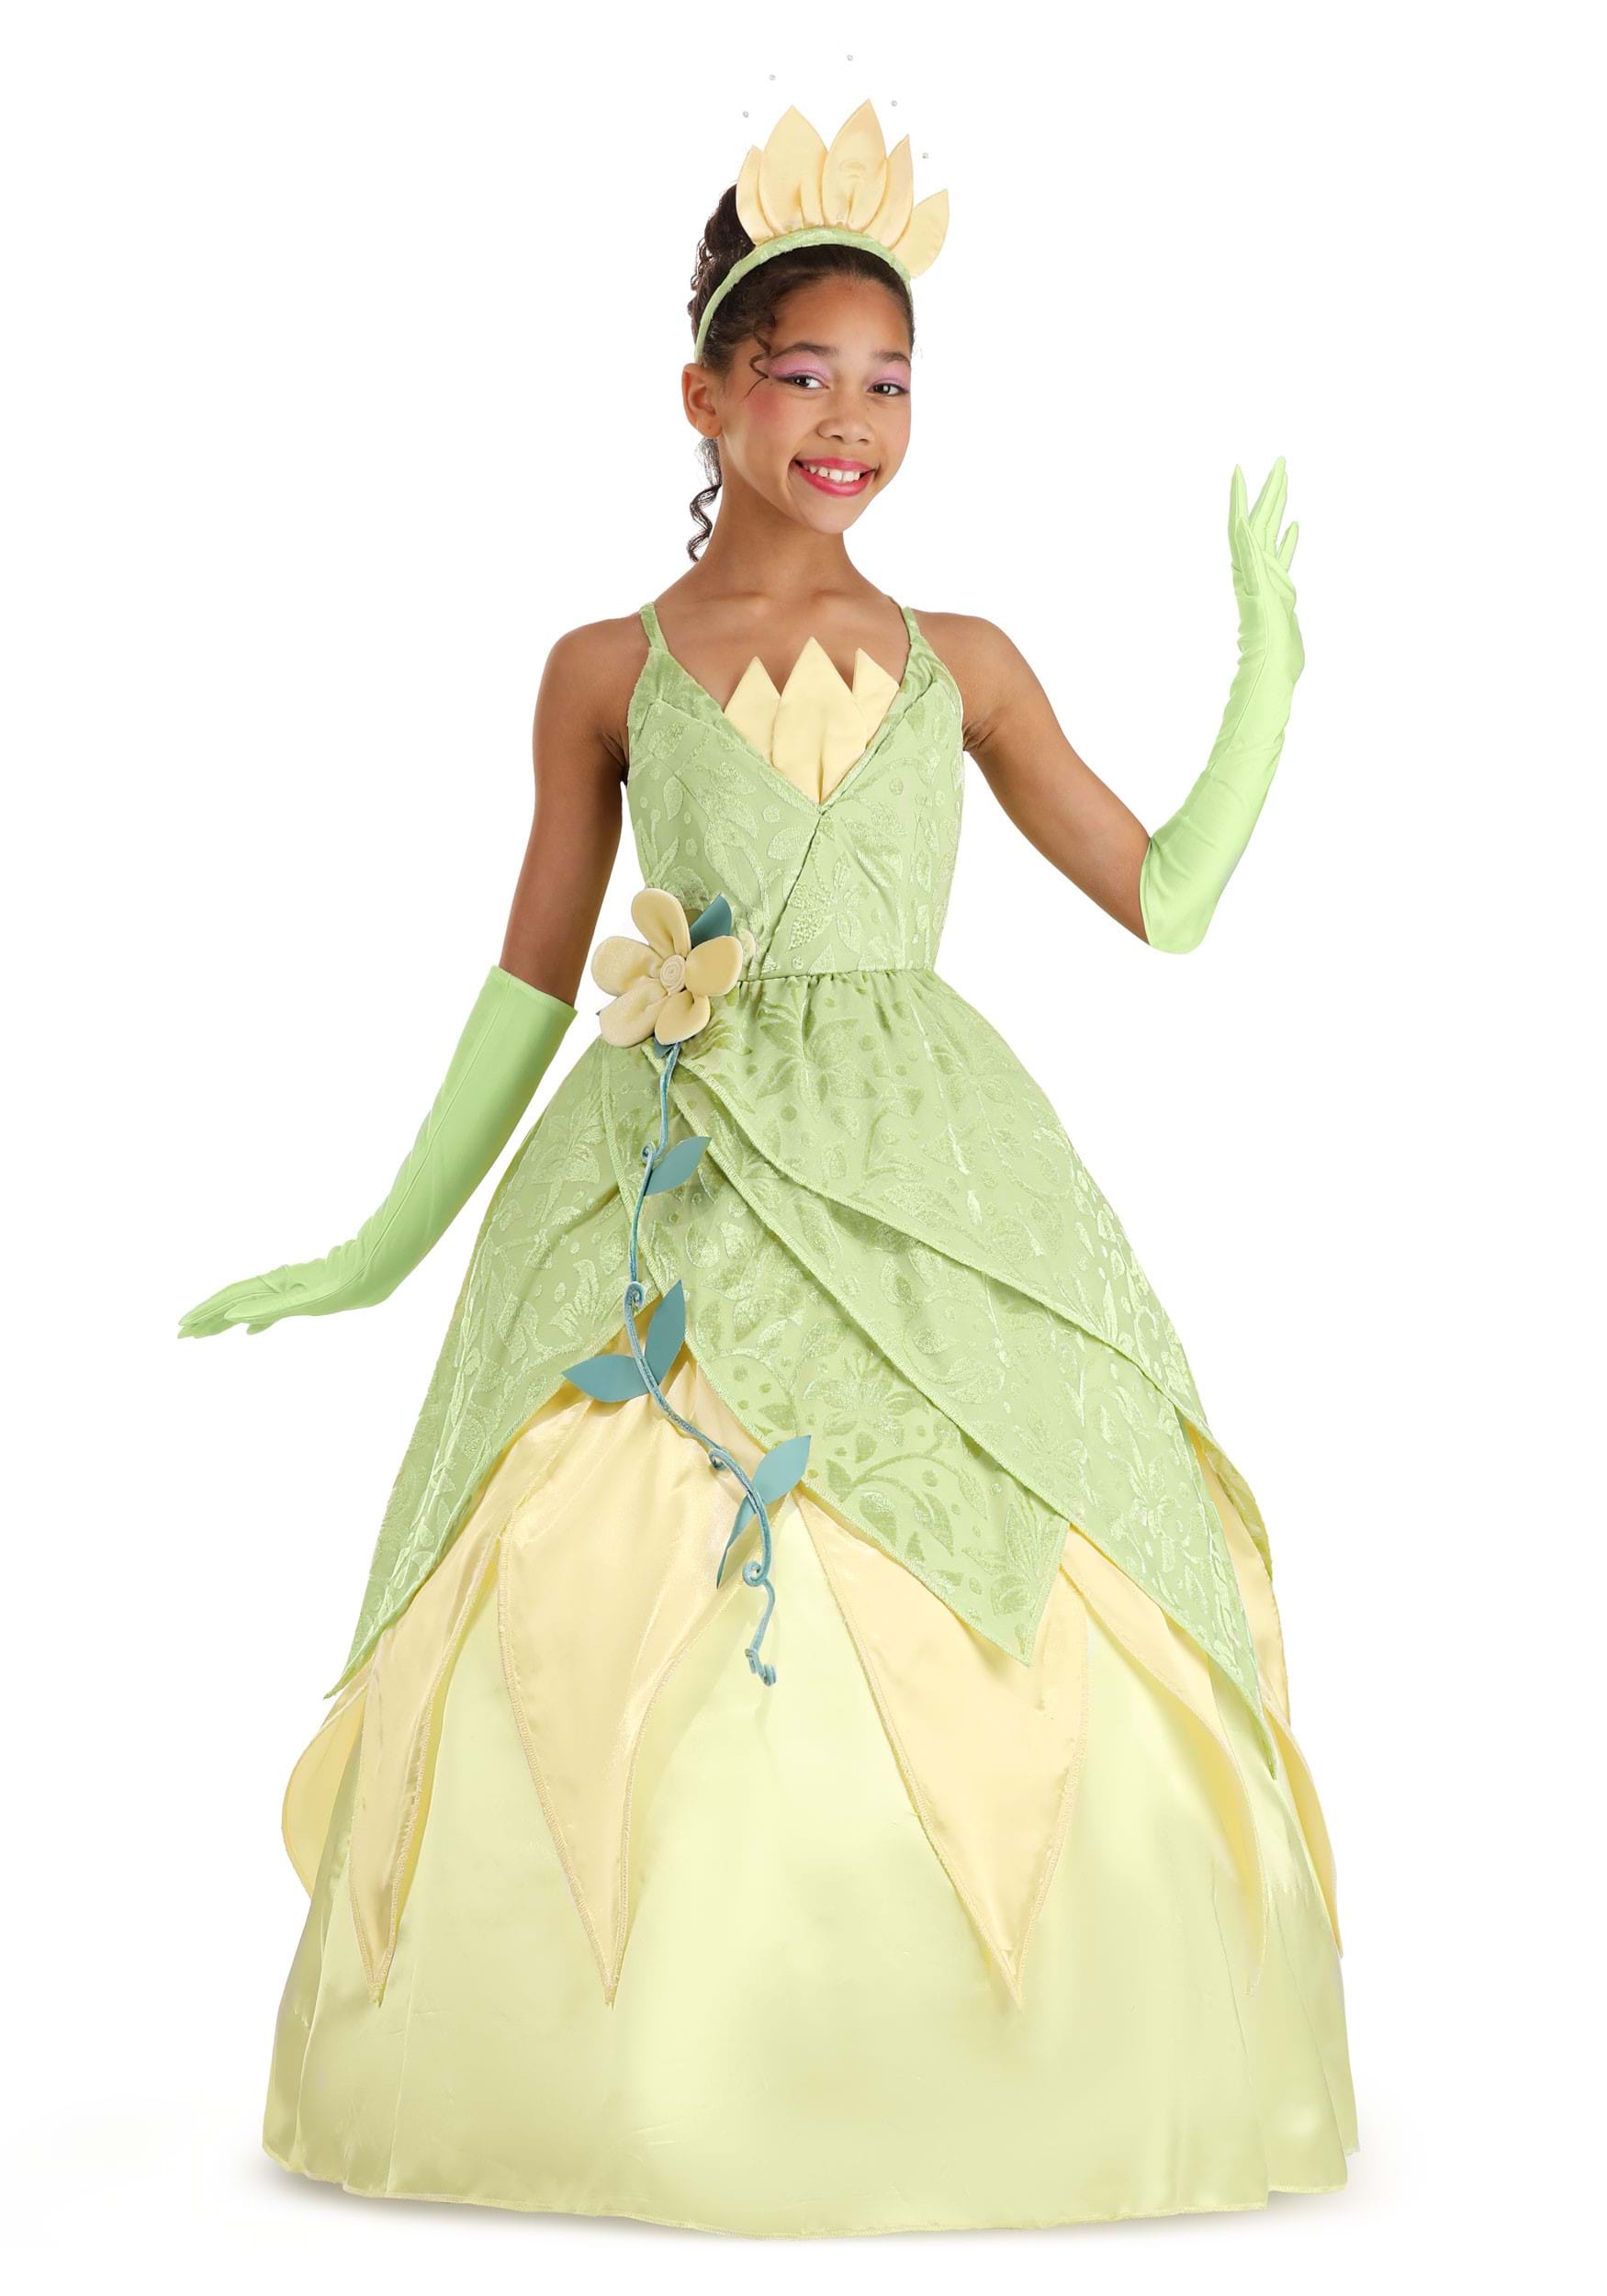 Photos - Fancy Dress FUN Costumes Girl's Disney Deluxe Tiana Costume Green/Yellow FUN3316CH